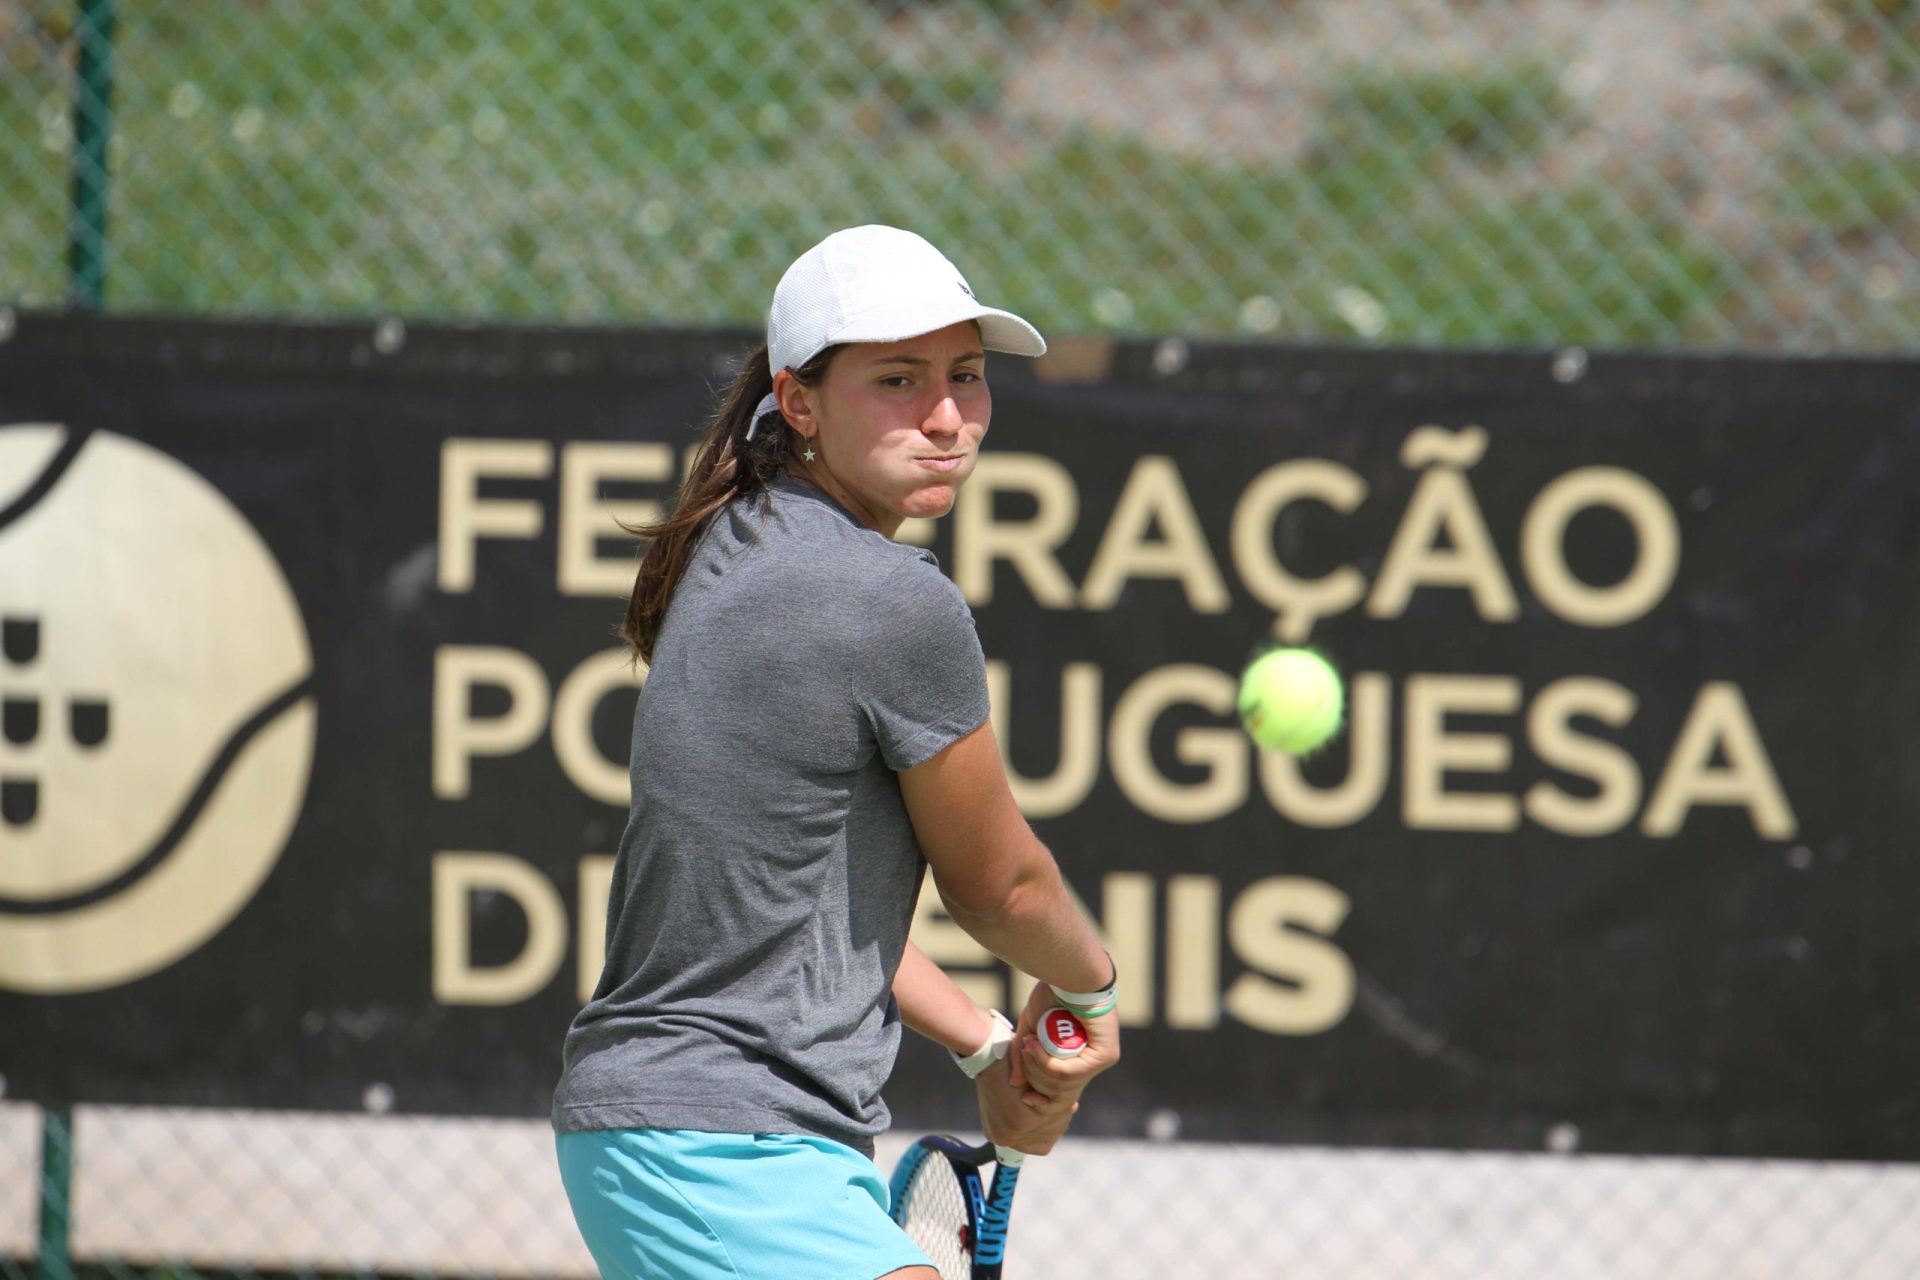 Ténis. Três portuguesas nos oitavos de final no Óbidos Ladies Open